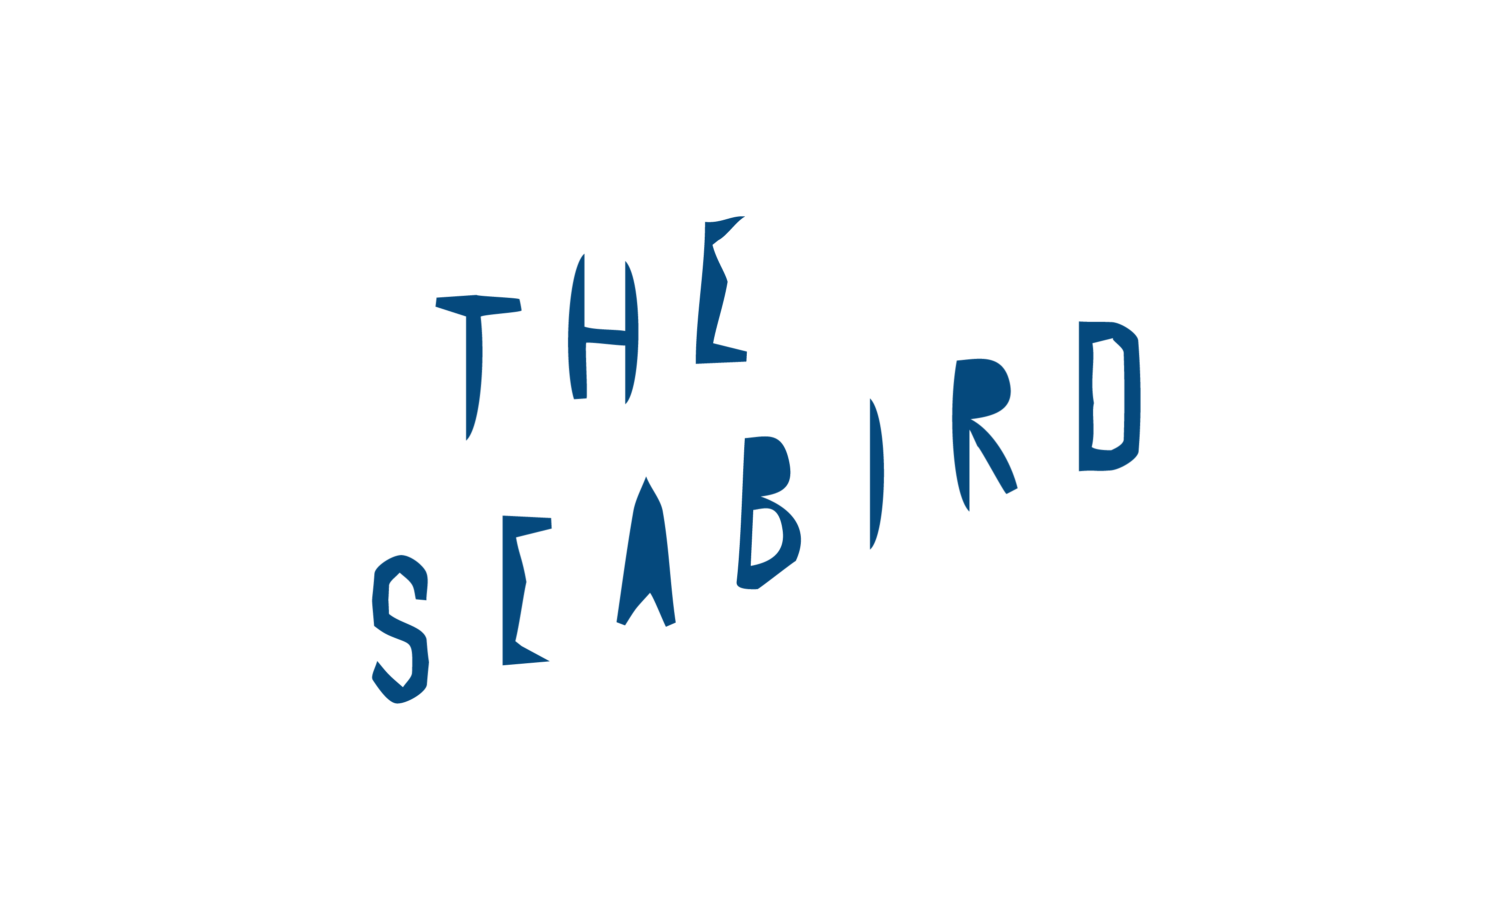 TheSeabird_PrimaryLogo-Stacked_Blue_CMYK